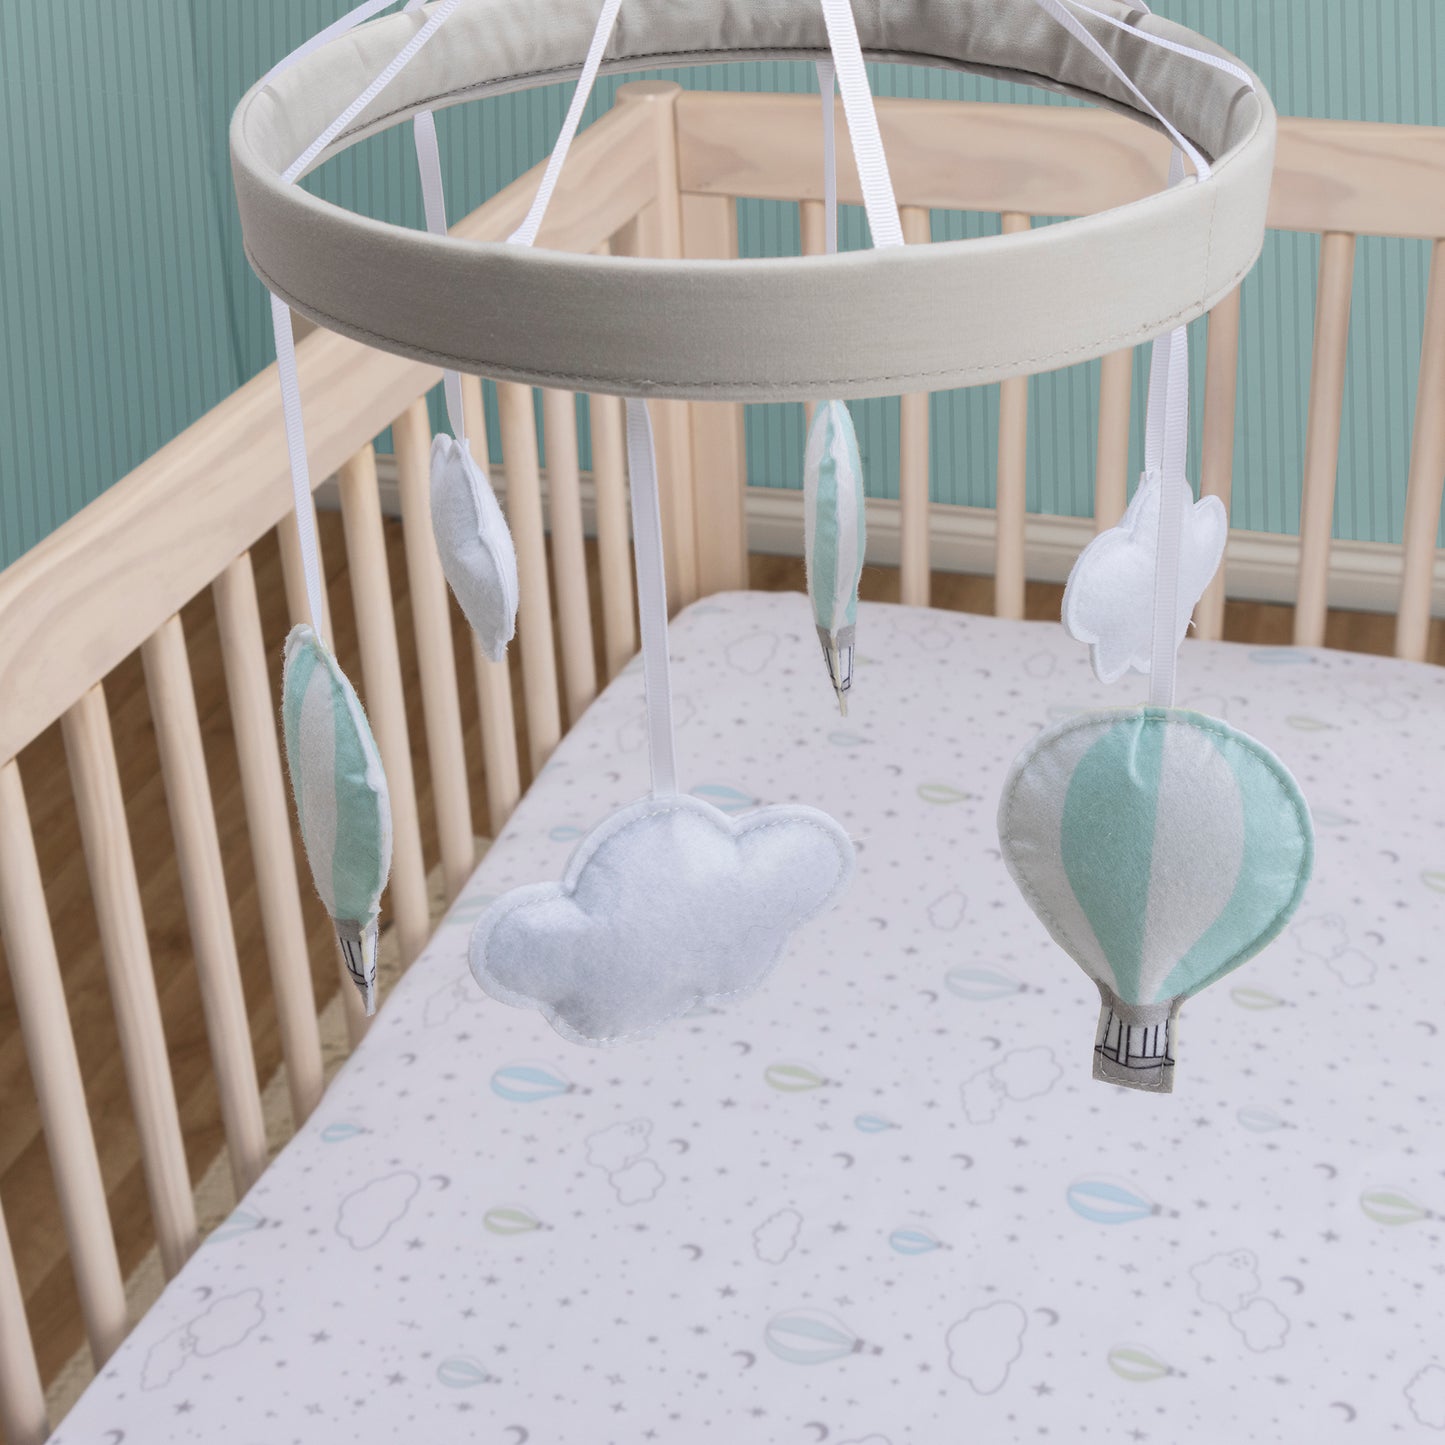 Hot Air Balloon Musical Crib Baby Mobile by Sammy & Lou®